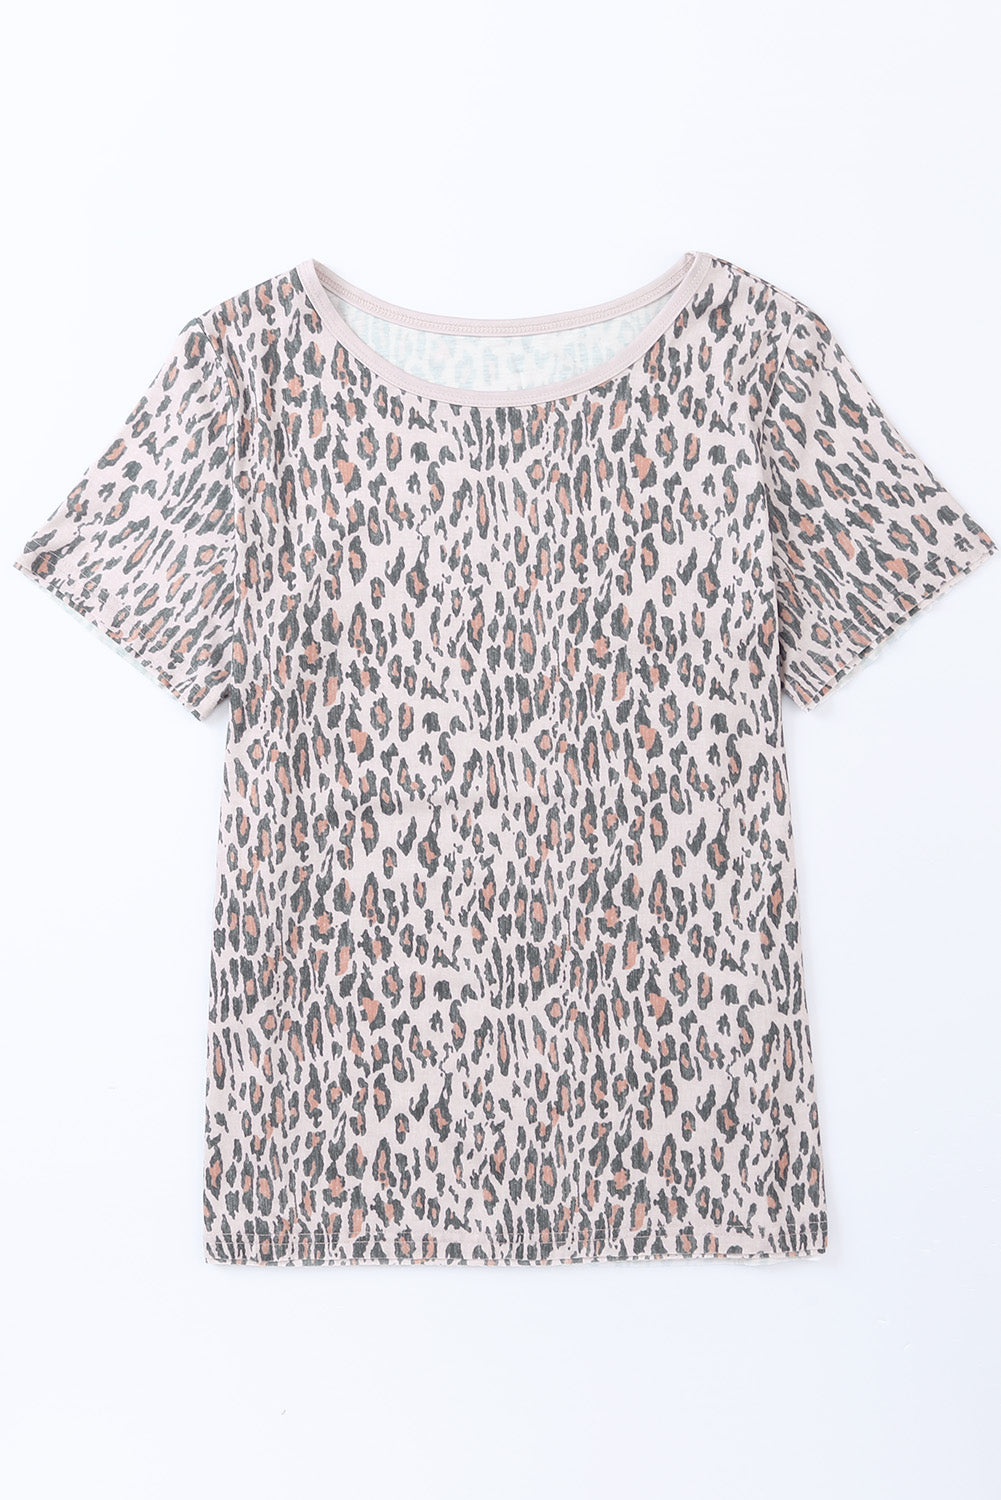 Leopard Animal Print Casual T-shirt